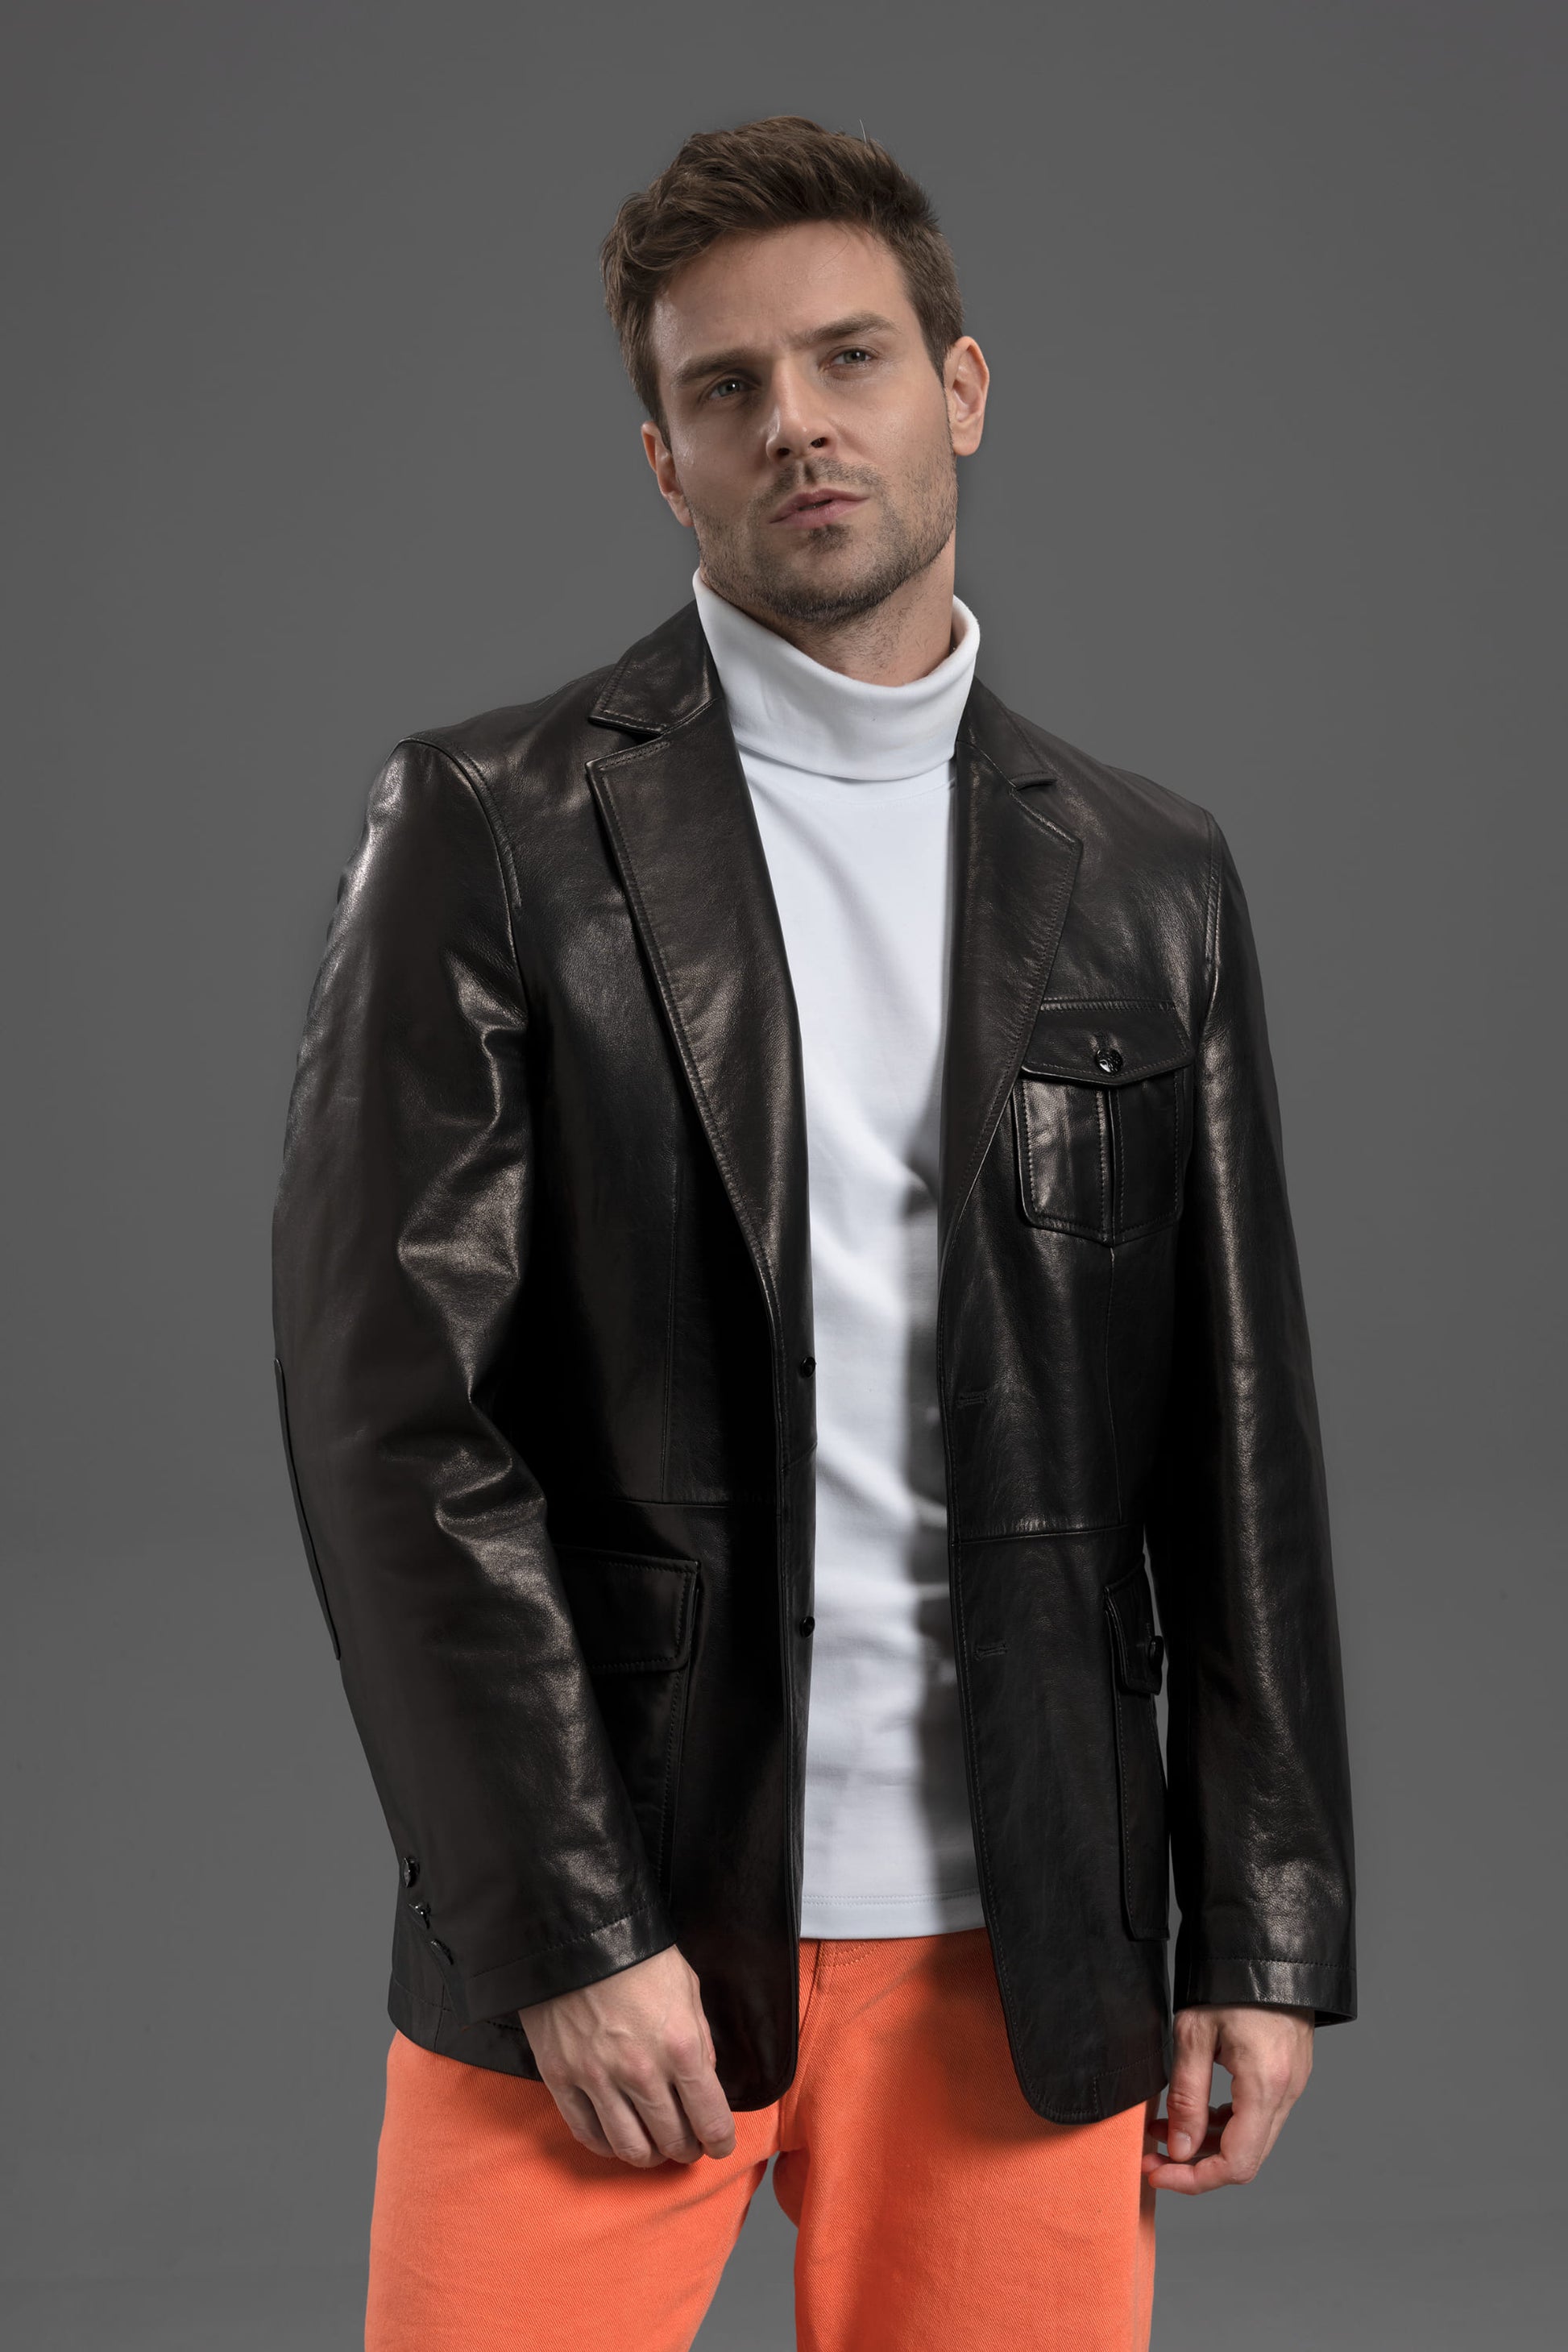 Palaleather Men's Two Button Leather Blazer Jacket